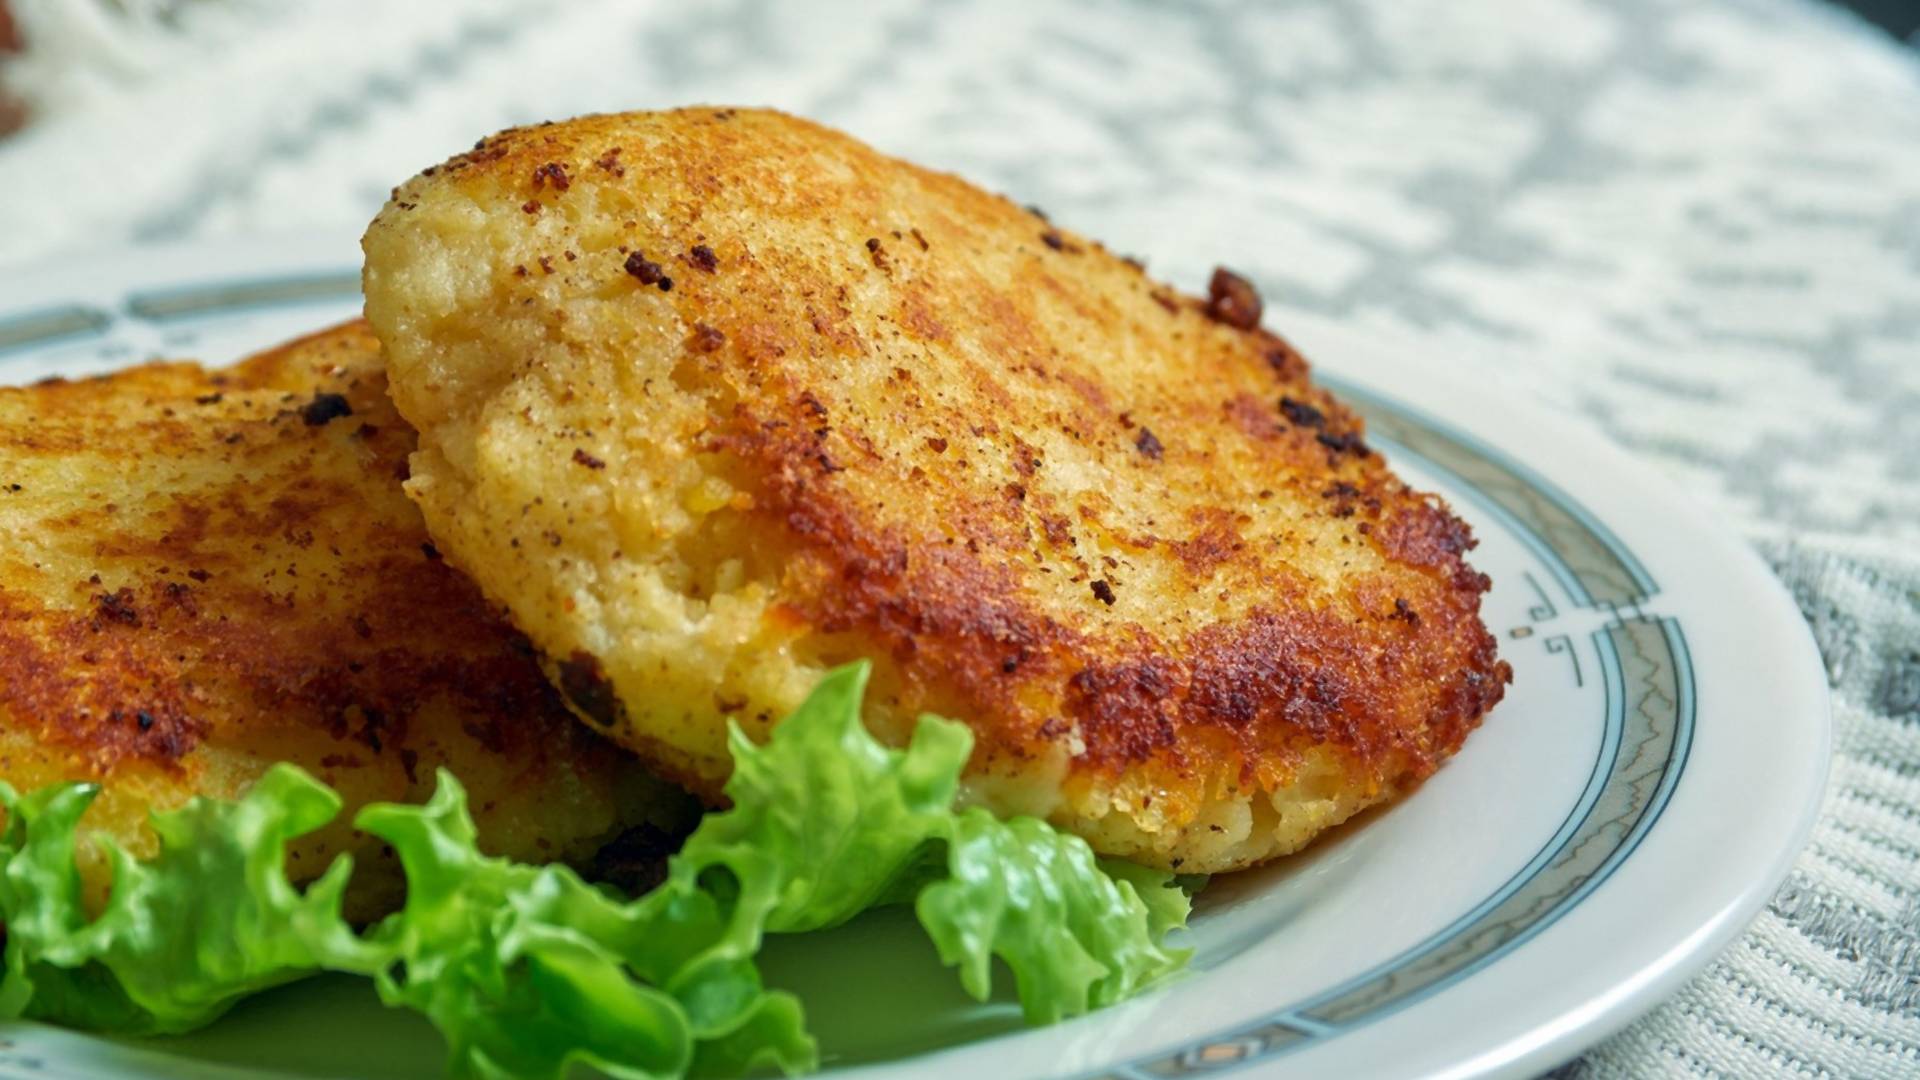 Najukusniji pohovani krompir se pravi po ovom receptu: garantujemo da niste jeli bolji